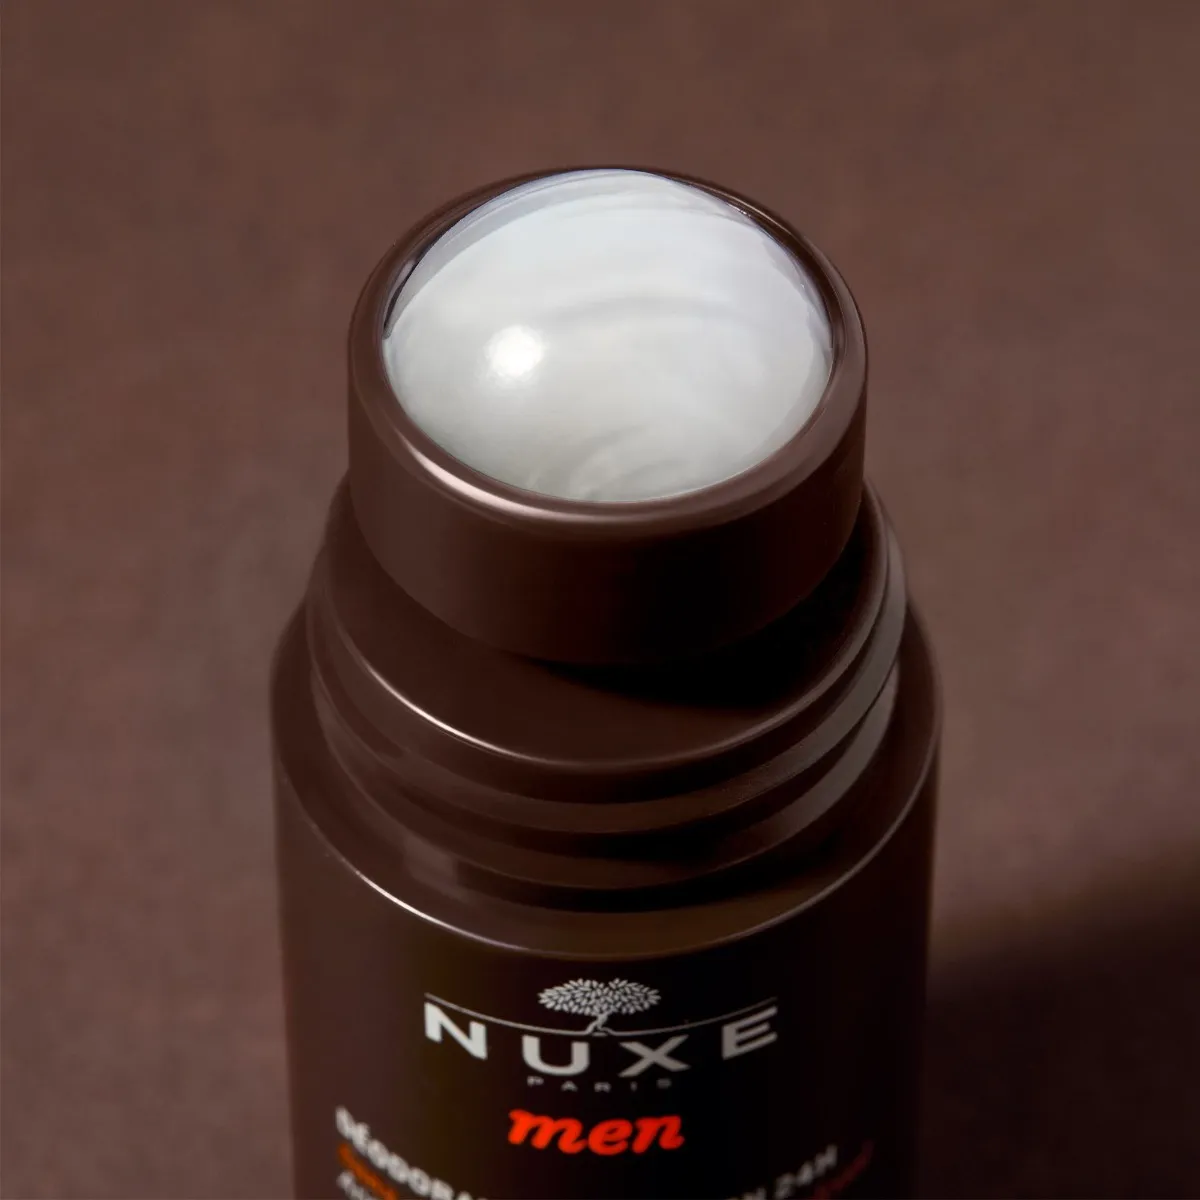 Nuxe Men Dezodorant roll-on, 50 ml 